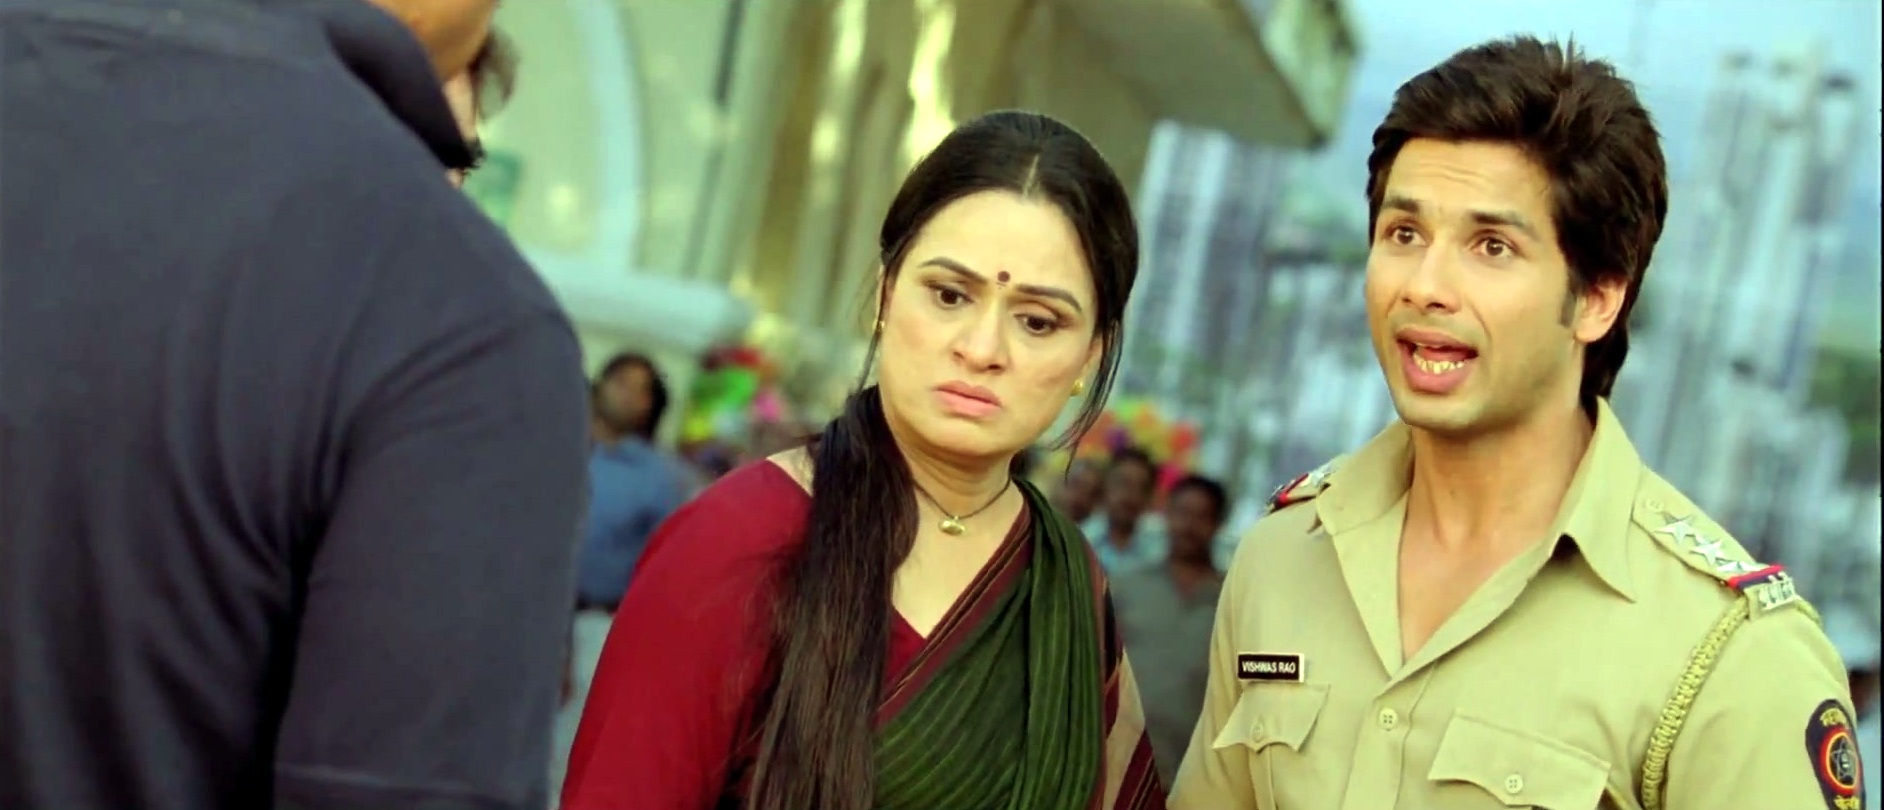 Padmini Kolhapure, Shahid Kapoor in still from the movie Phata Poster Nikhla Hero